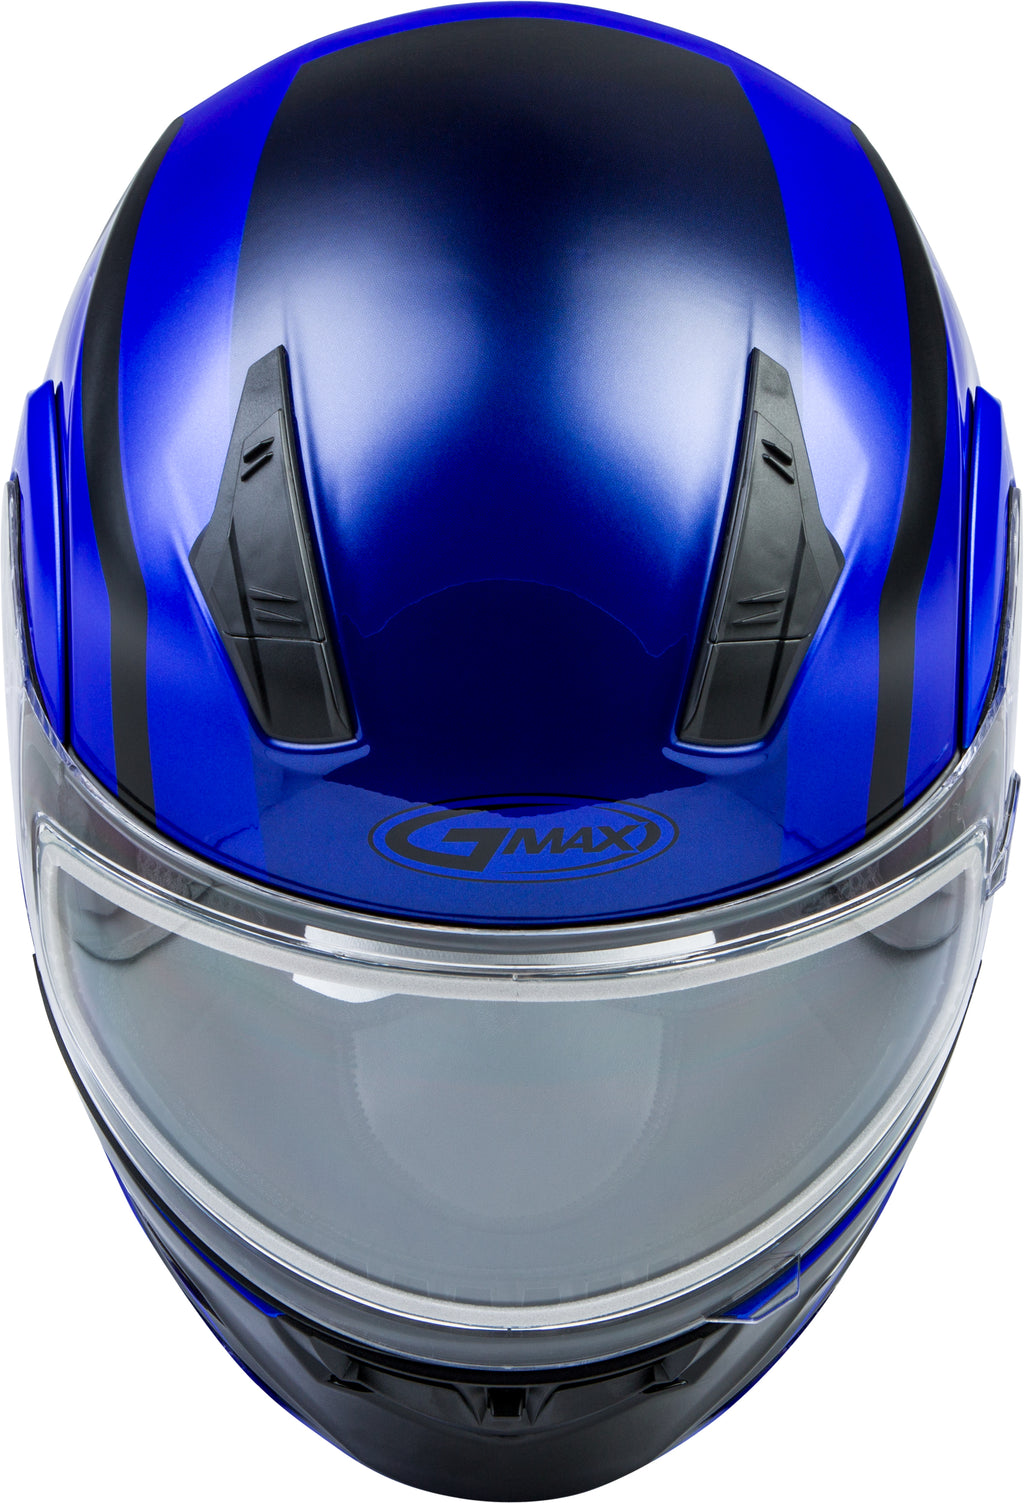 Md 04s Modular Docket Snow Helmet Blue/Black 3x